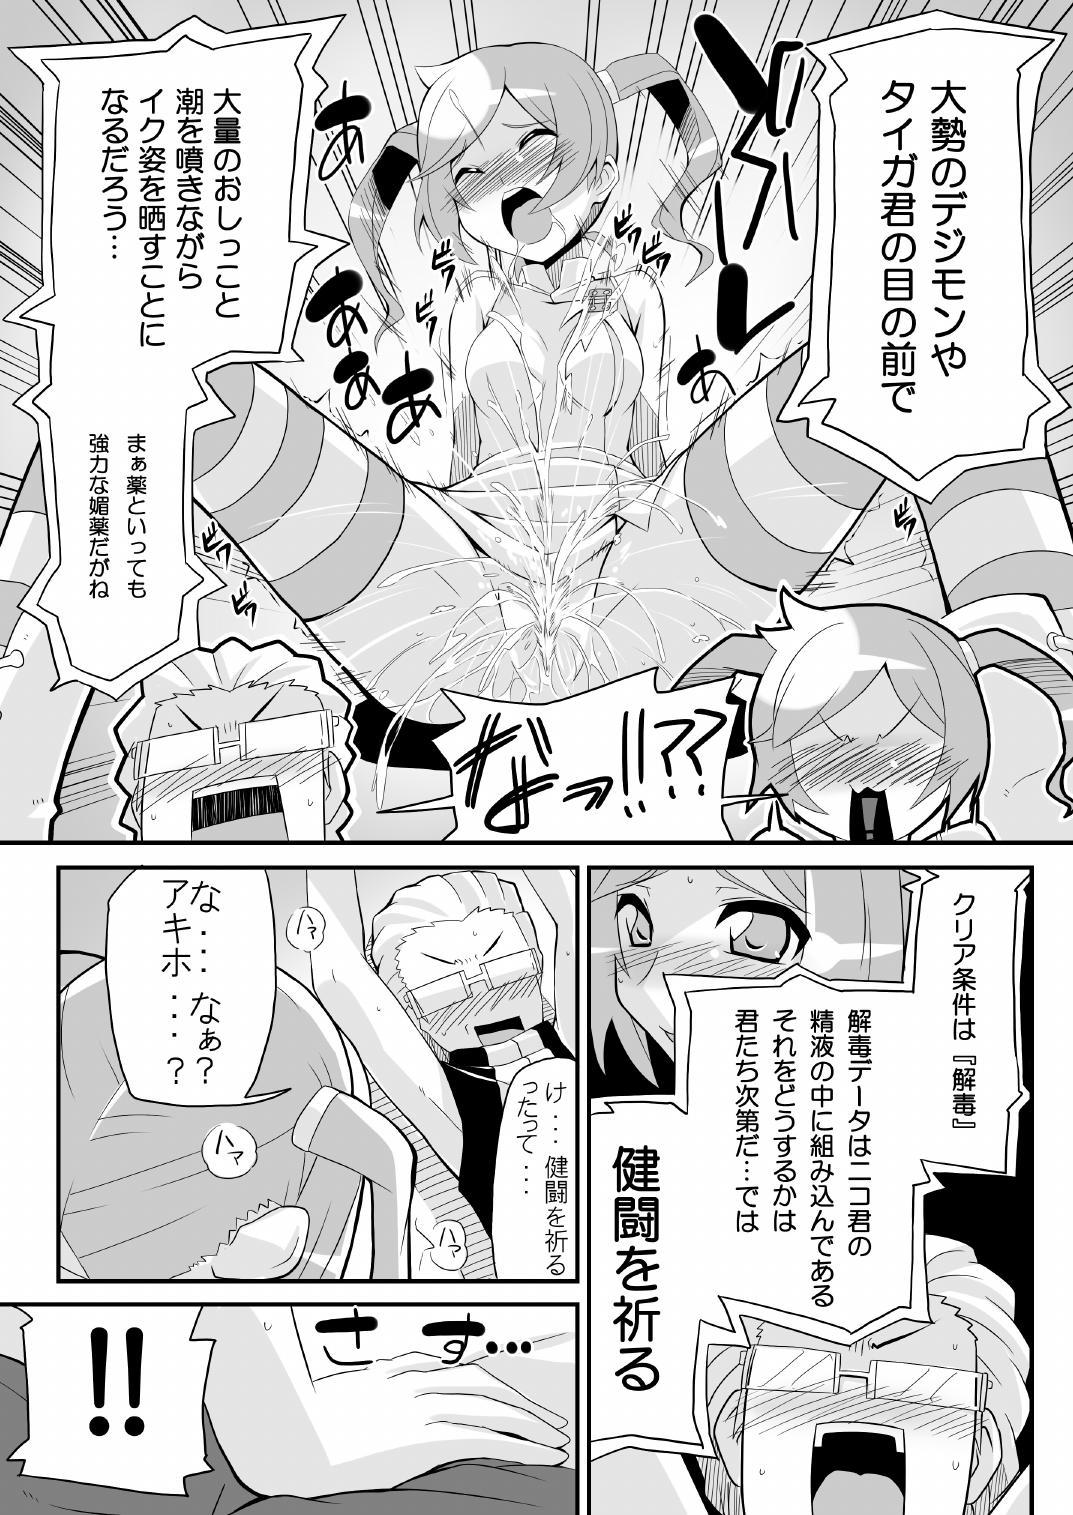 Rope Re:Akiho/Rinatize Ero - Digimon Amateur Sex - Page 5